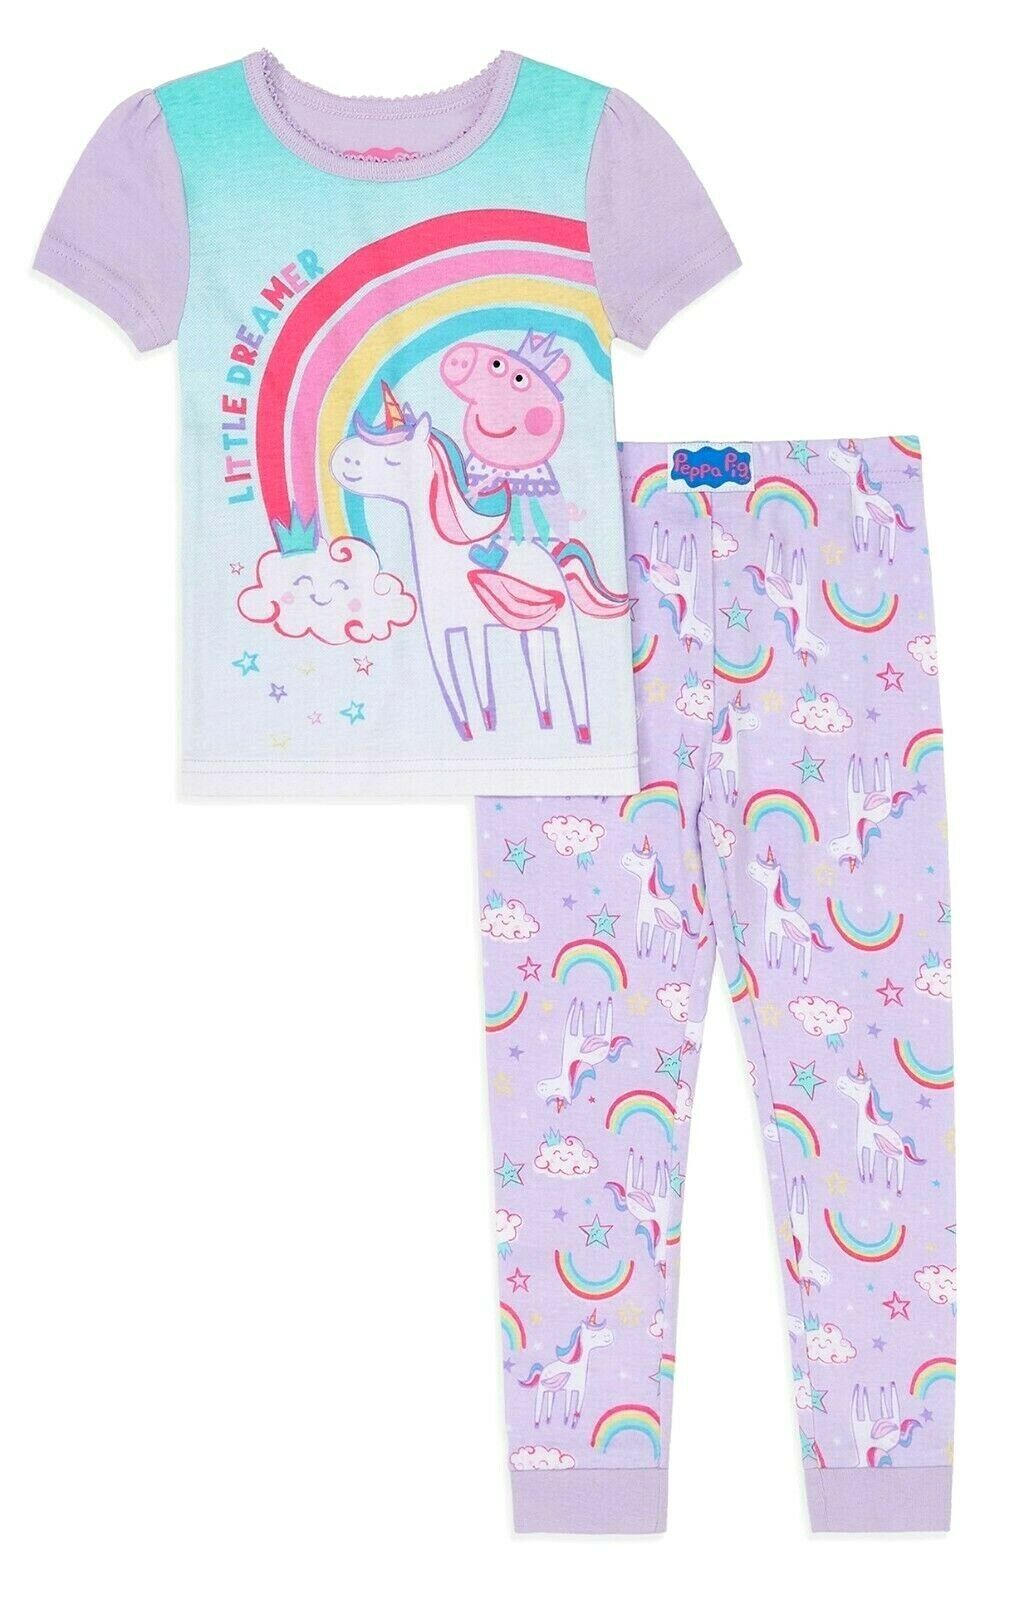 PEPPA PIG Cotton Snug-Fit Pajamas Sleepwear Set NWT Toddler's 2T, 3T or 4T  $20